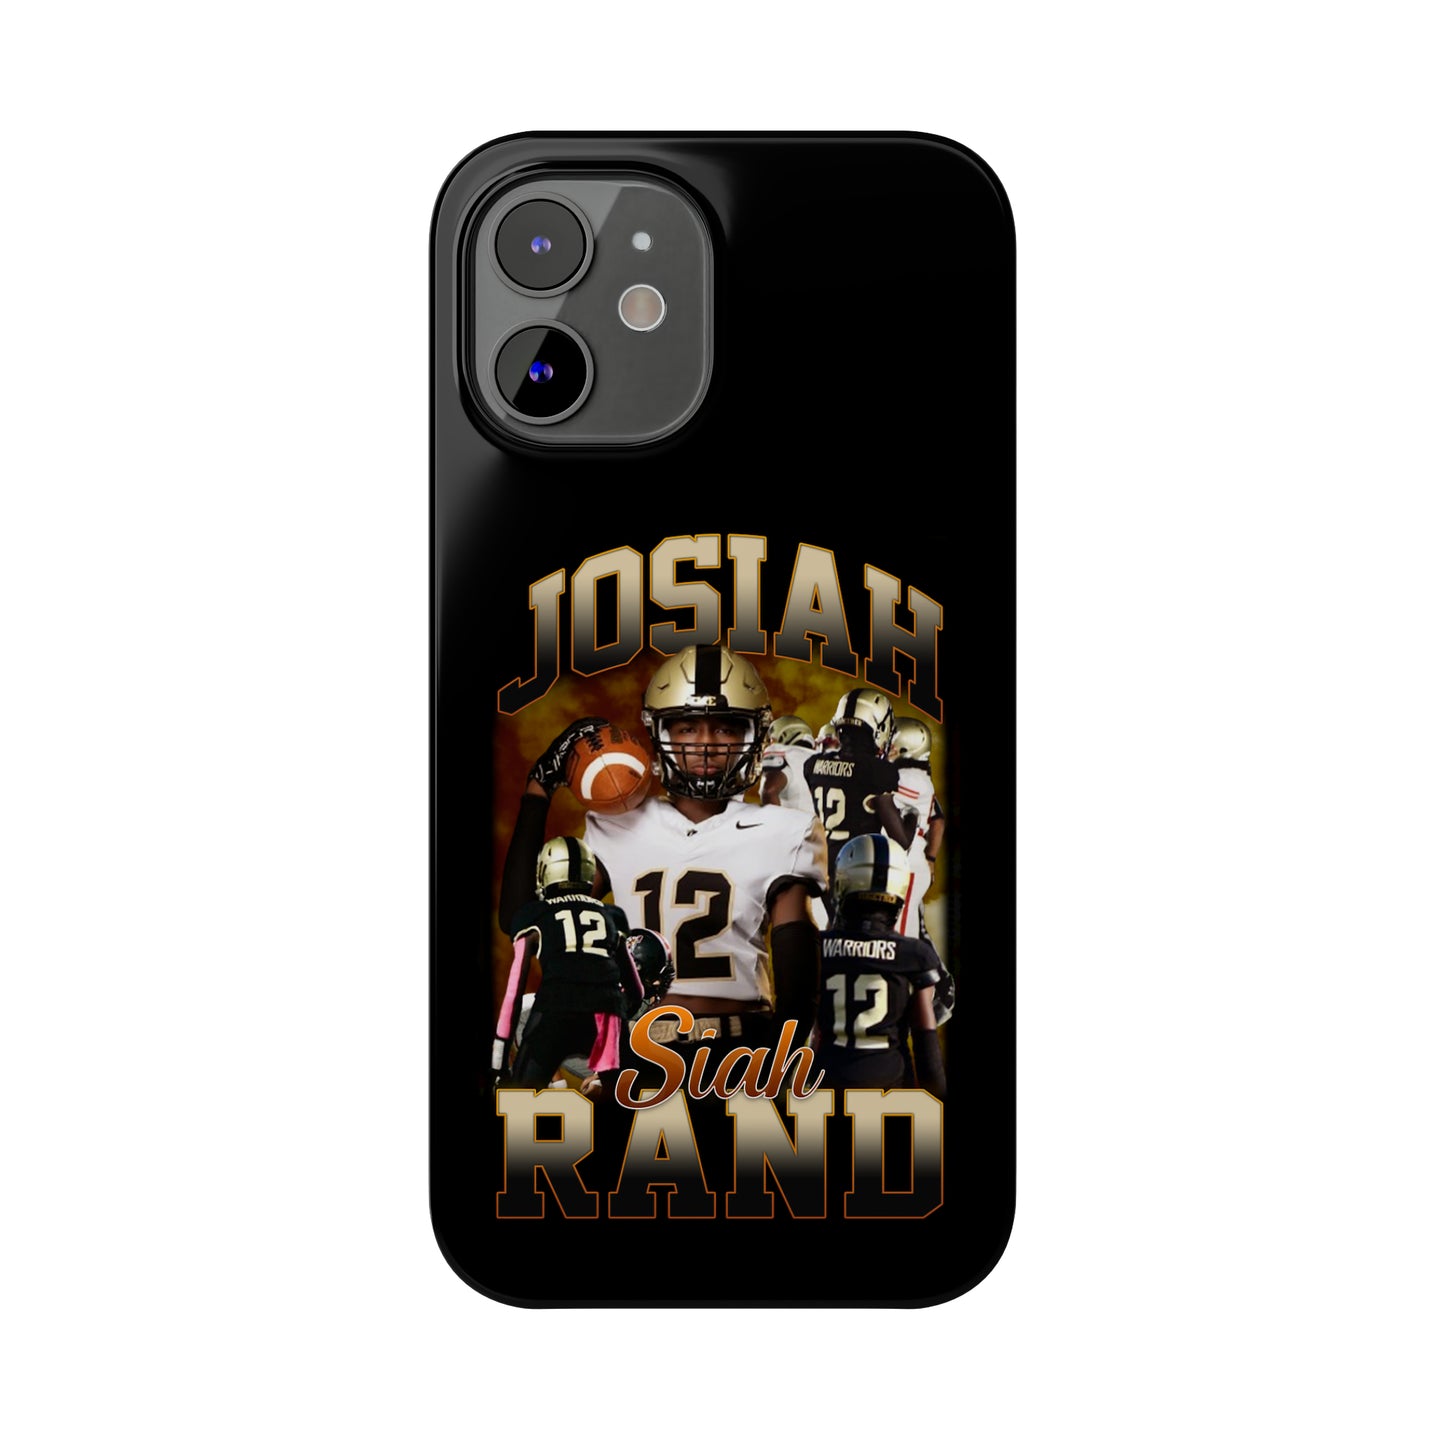 Josiah Rand Phone Case